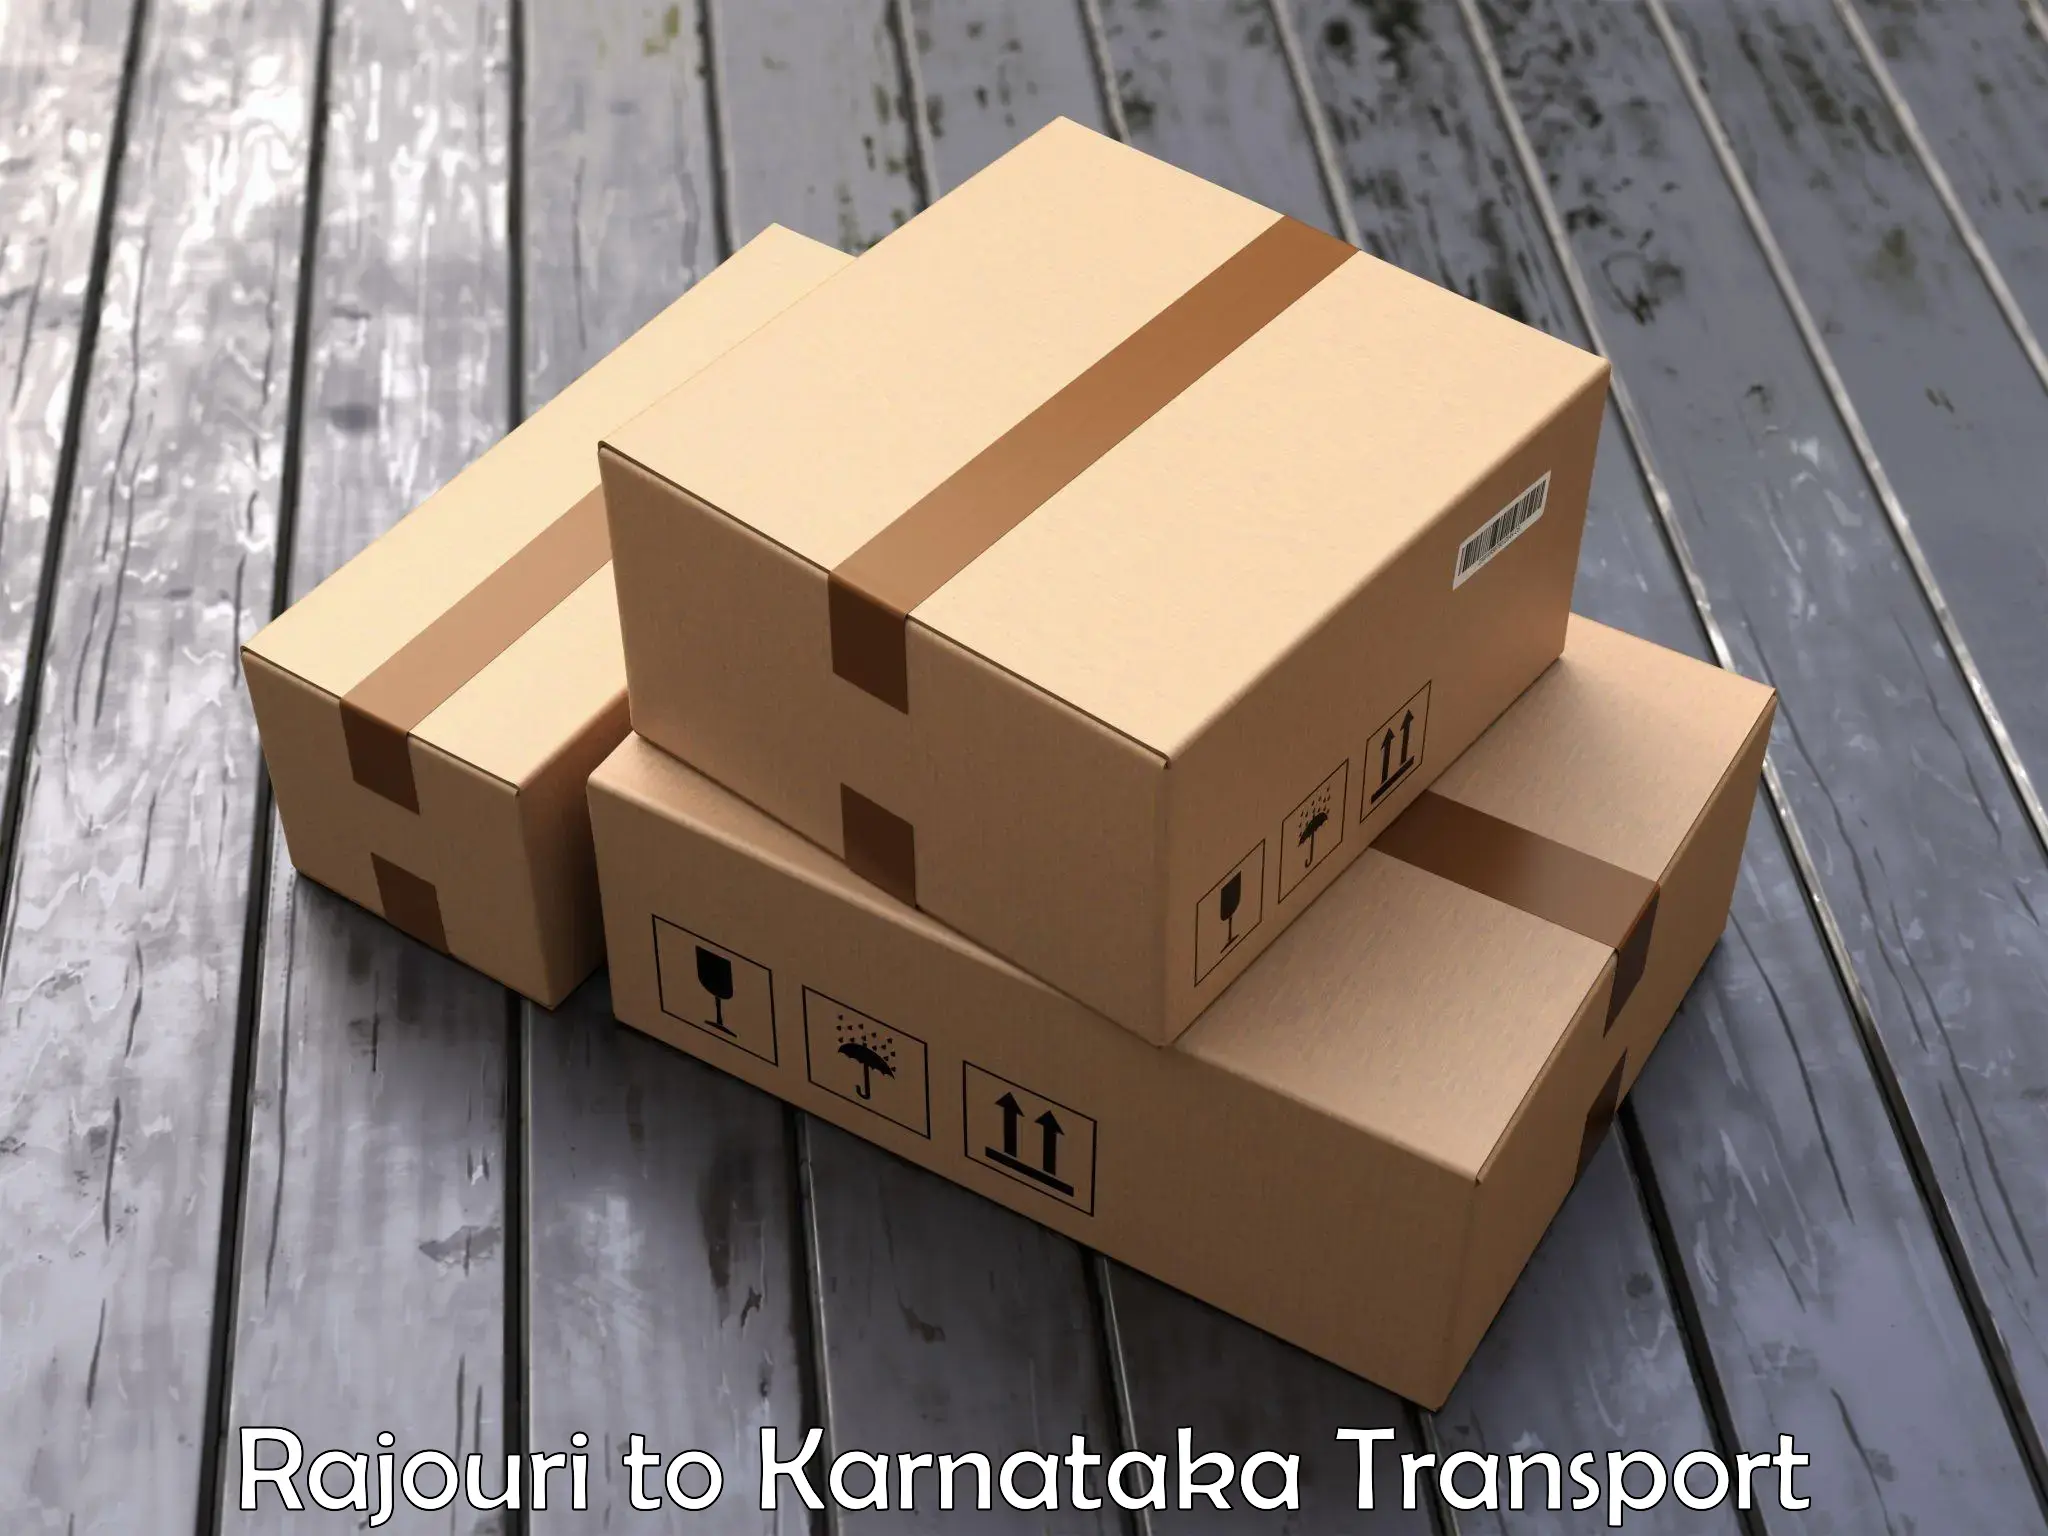 Transport bike from one state to another Rajouri to Karnataka